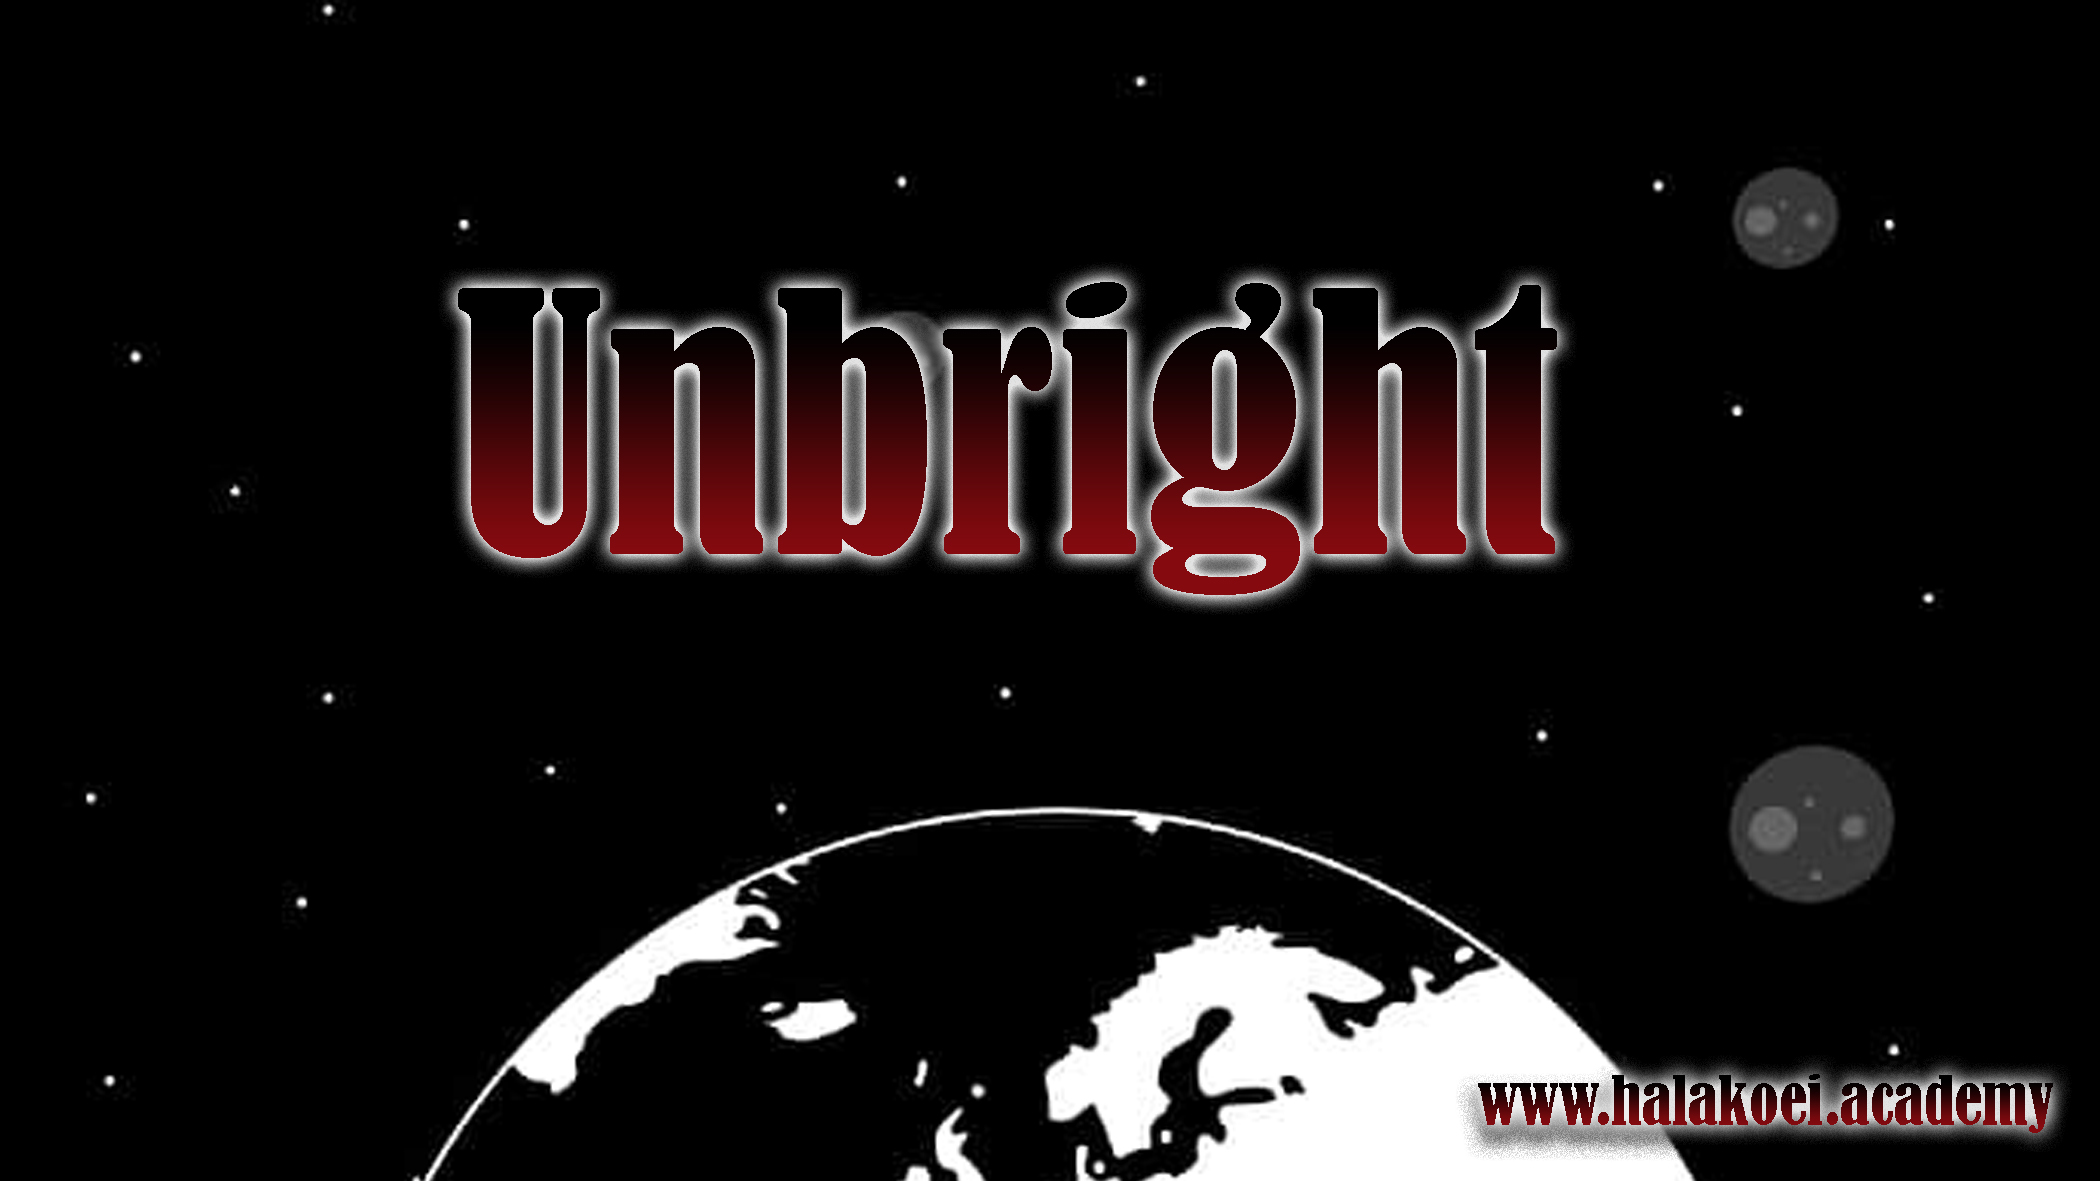  Unbright